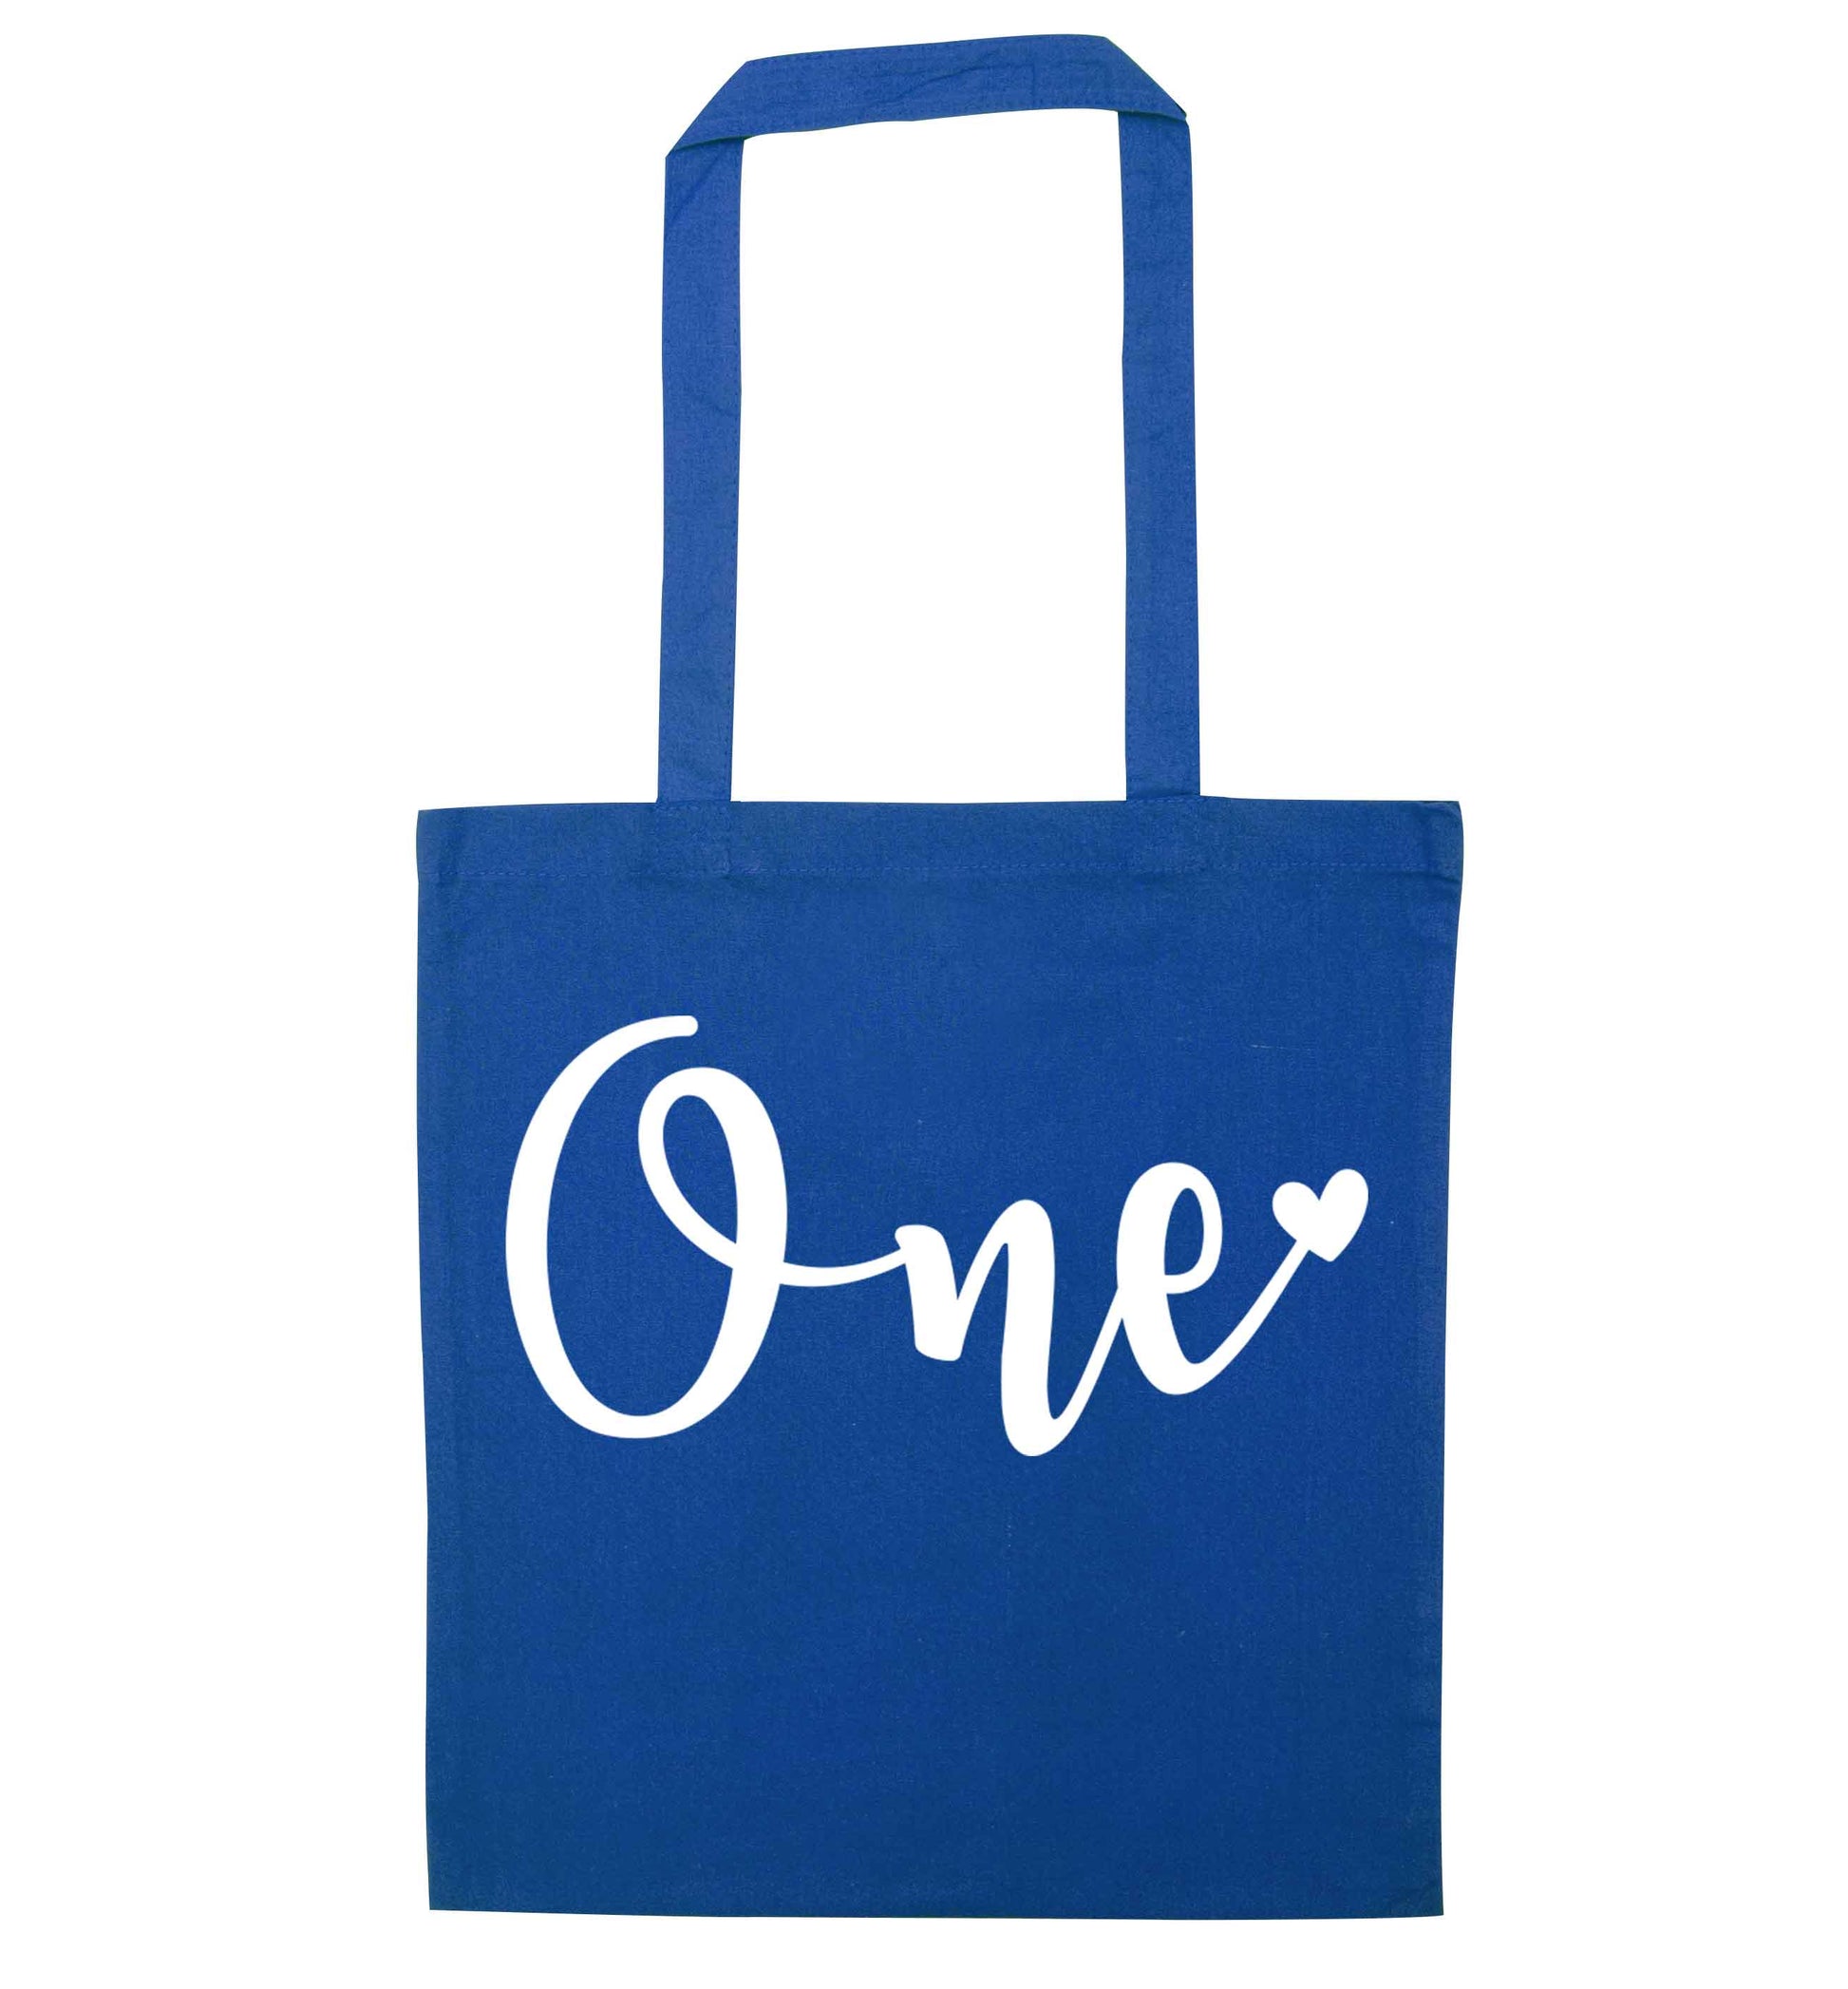 One blue tote bag